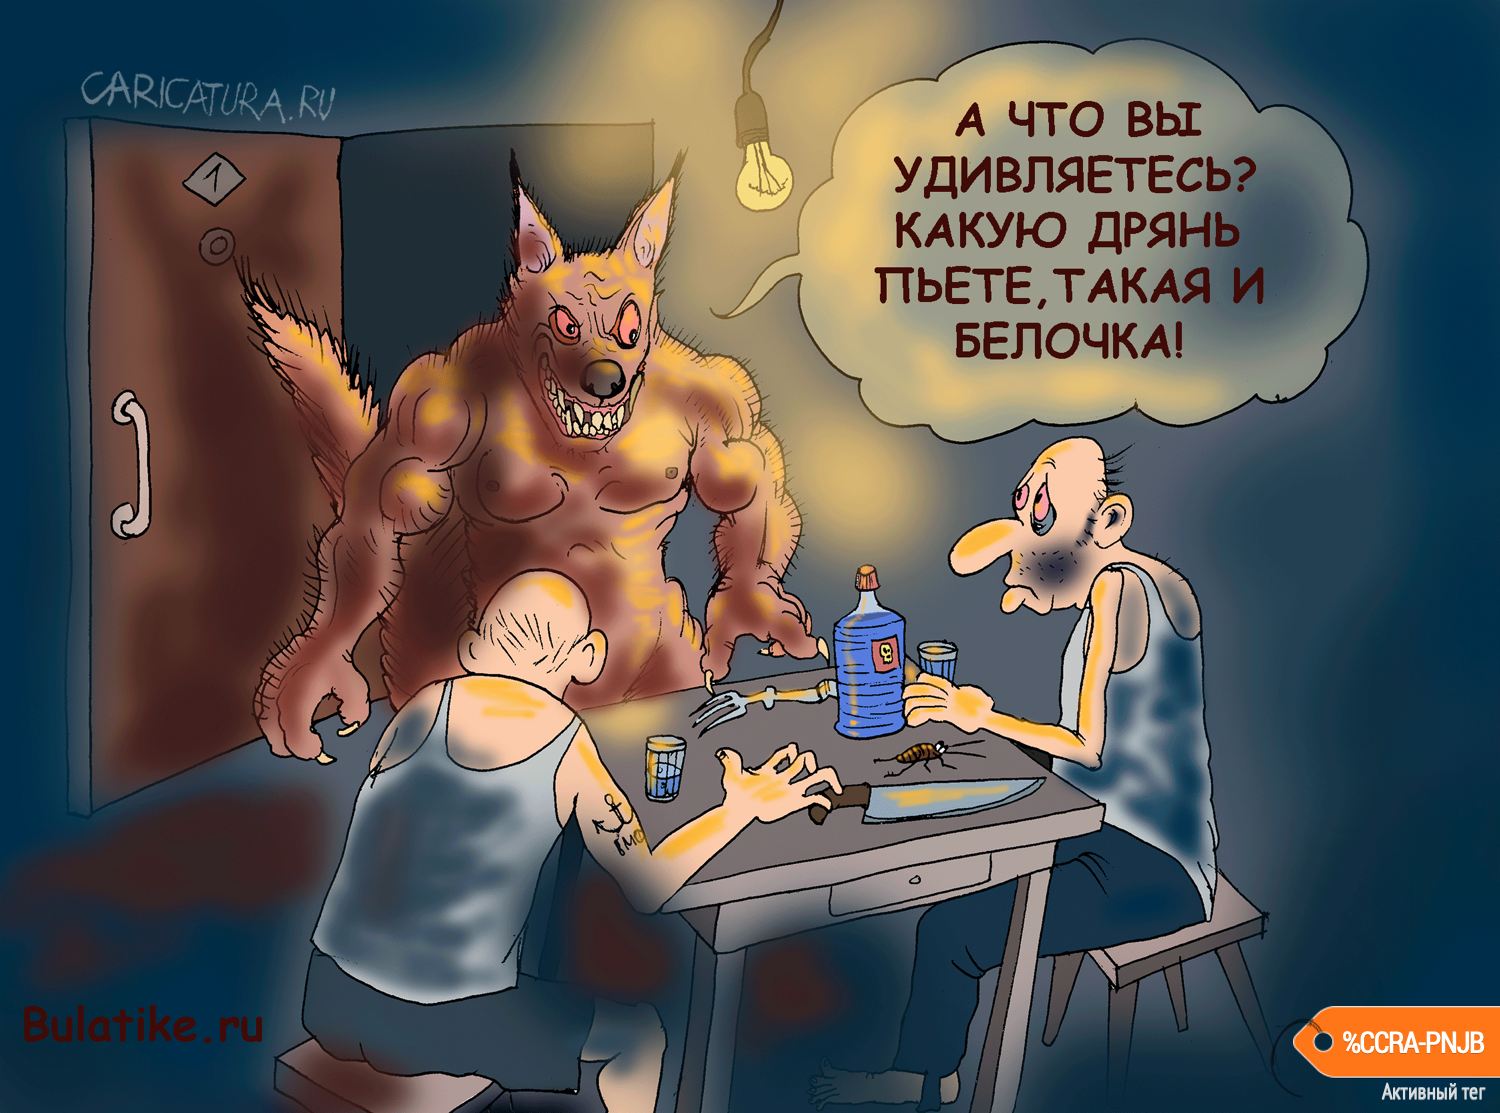 Карикатура "Пришла по чьи-то орешки", Булат Ирсаев